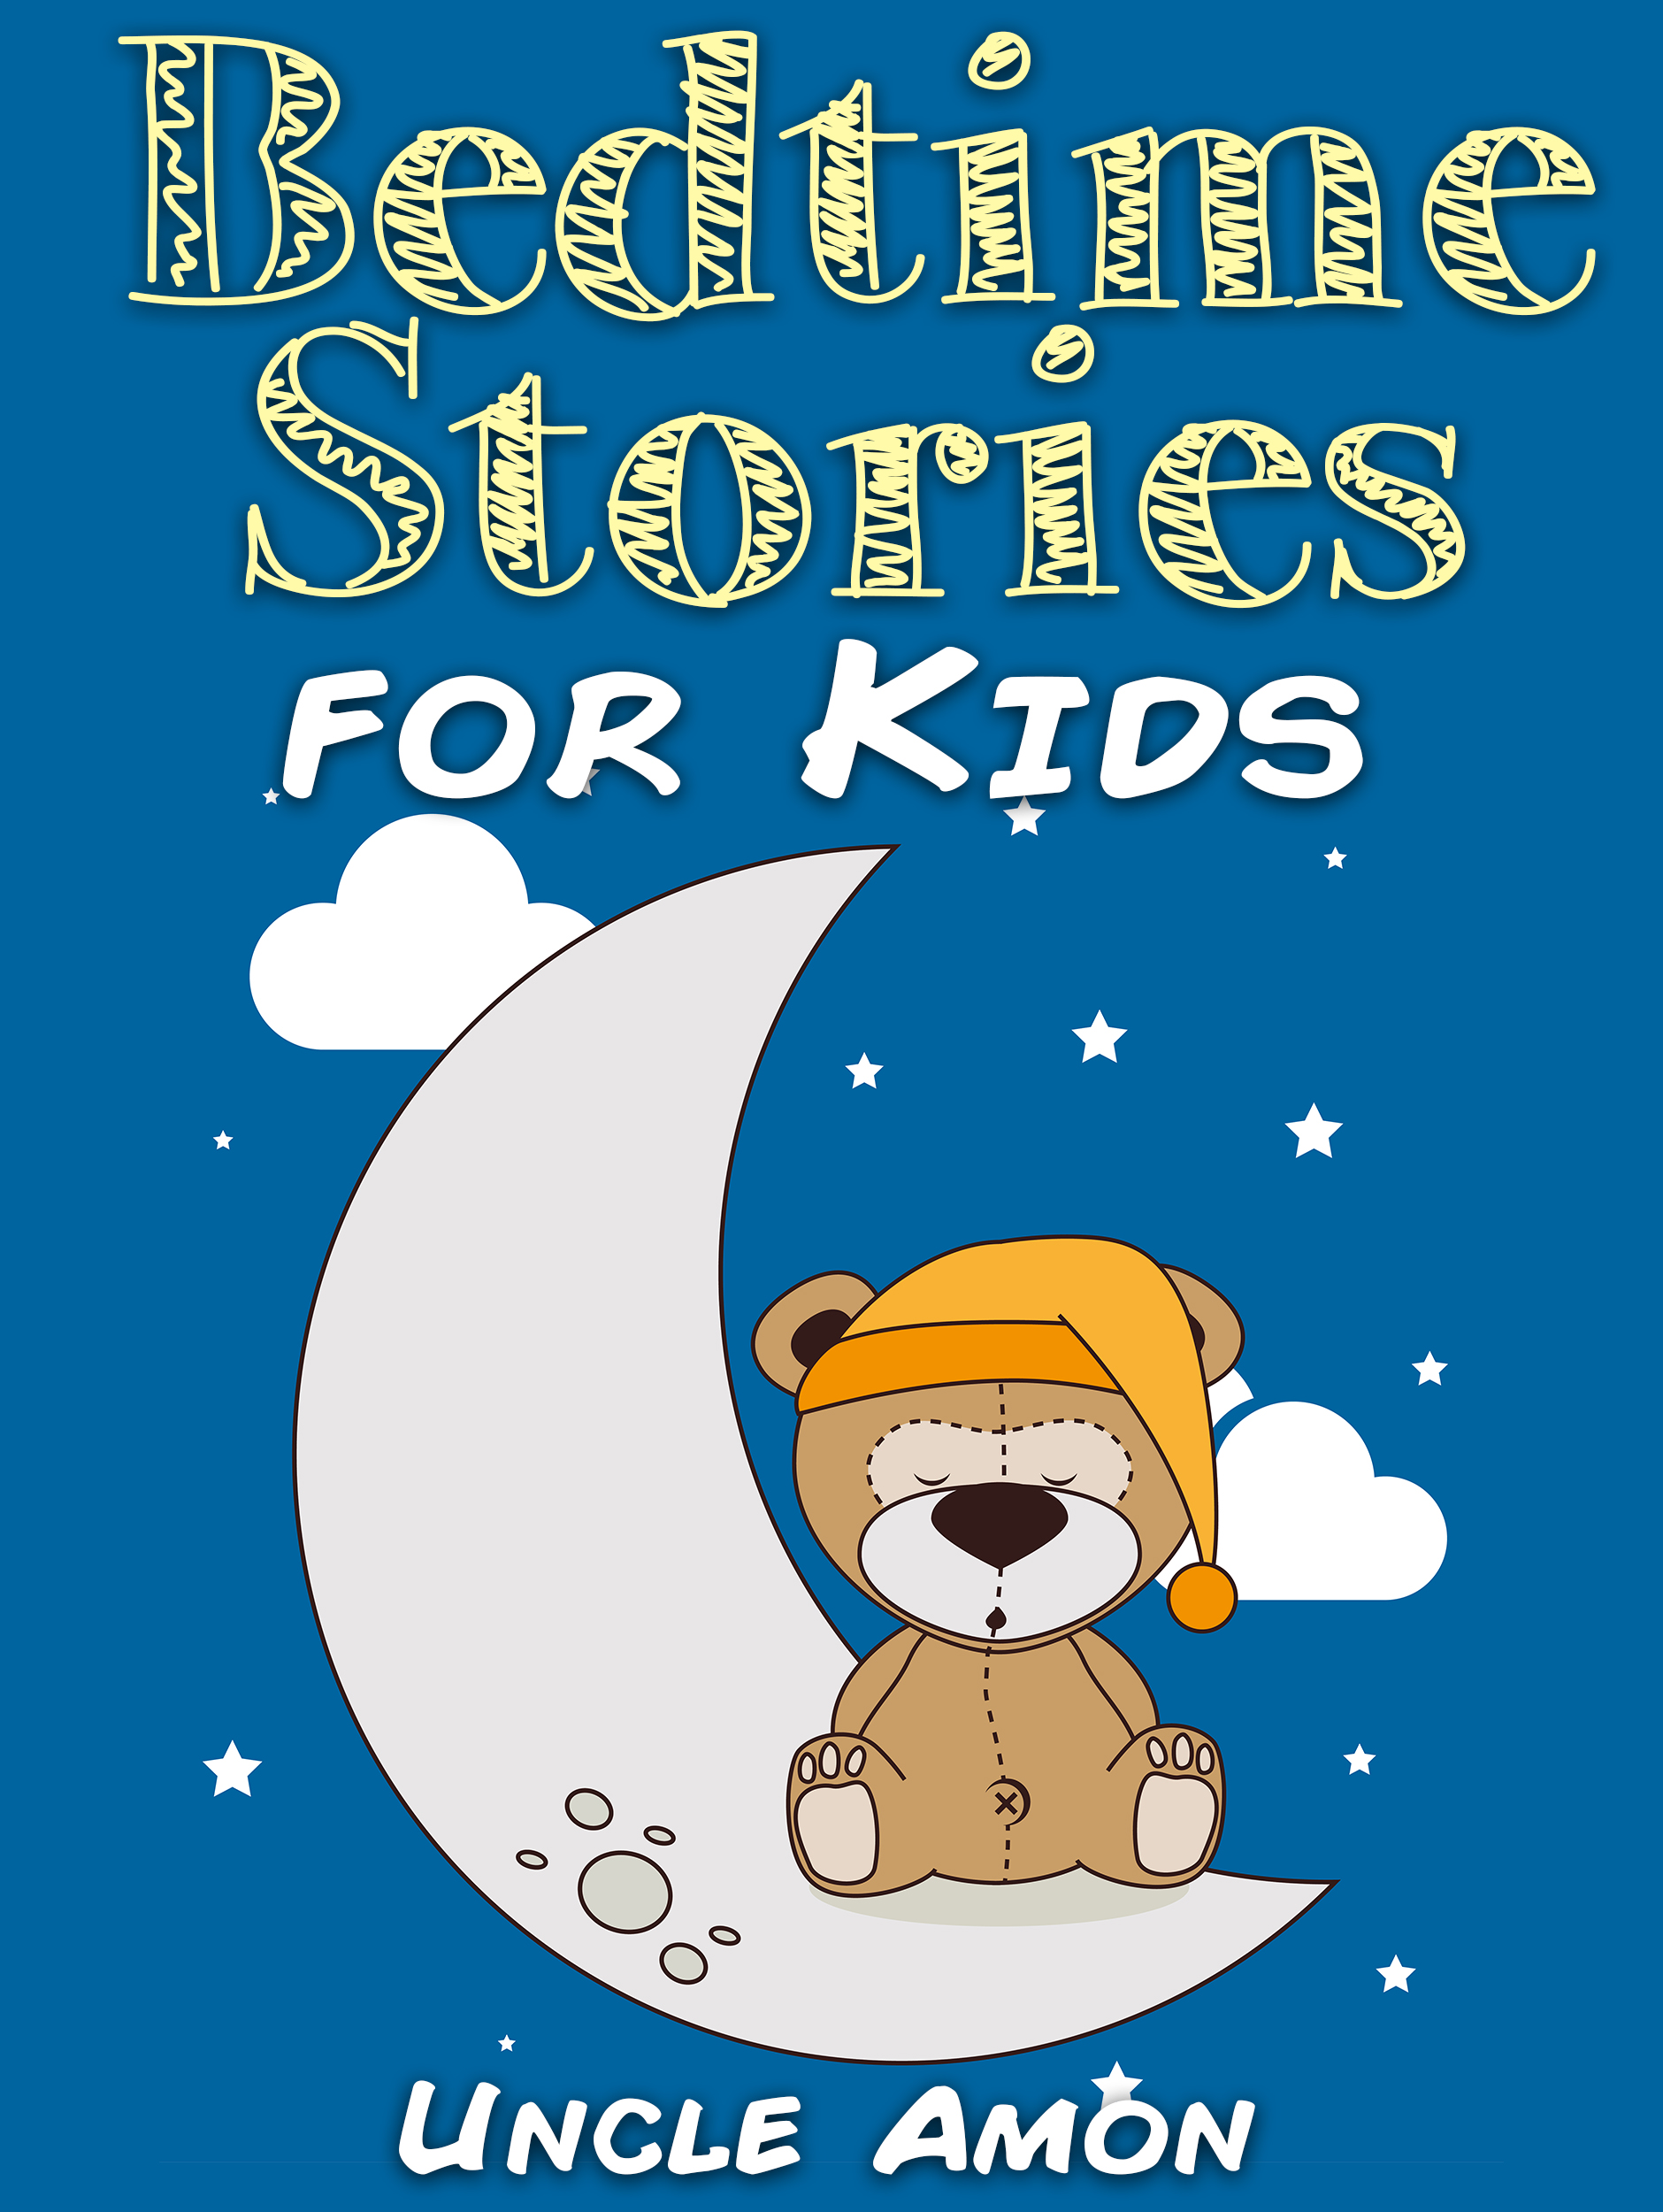 Childrens Bedtime Stories Bedtime Com Bedtime